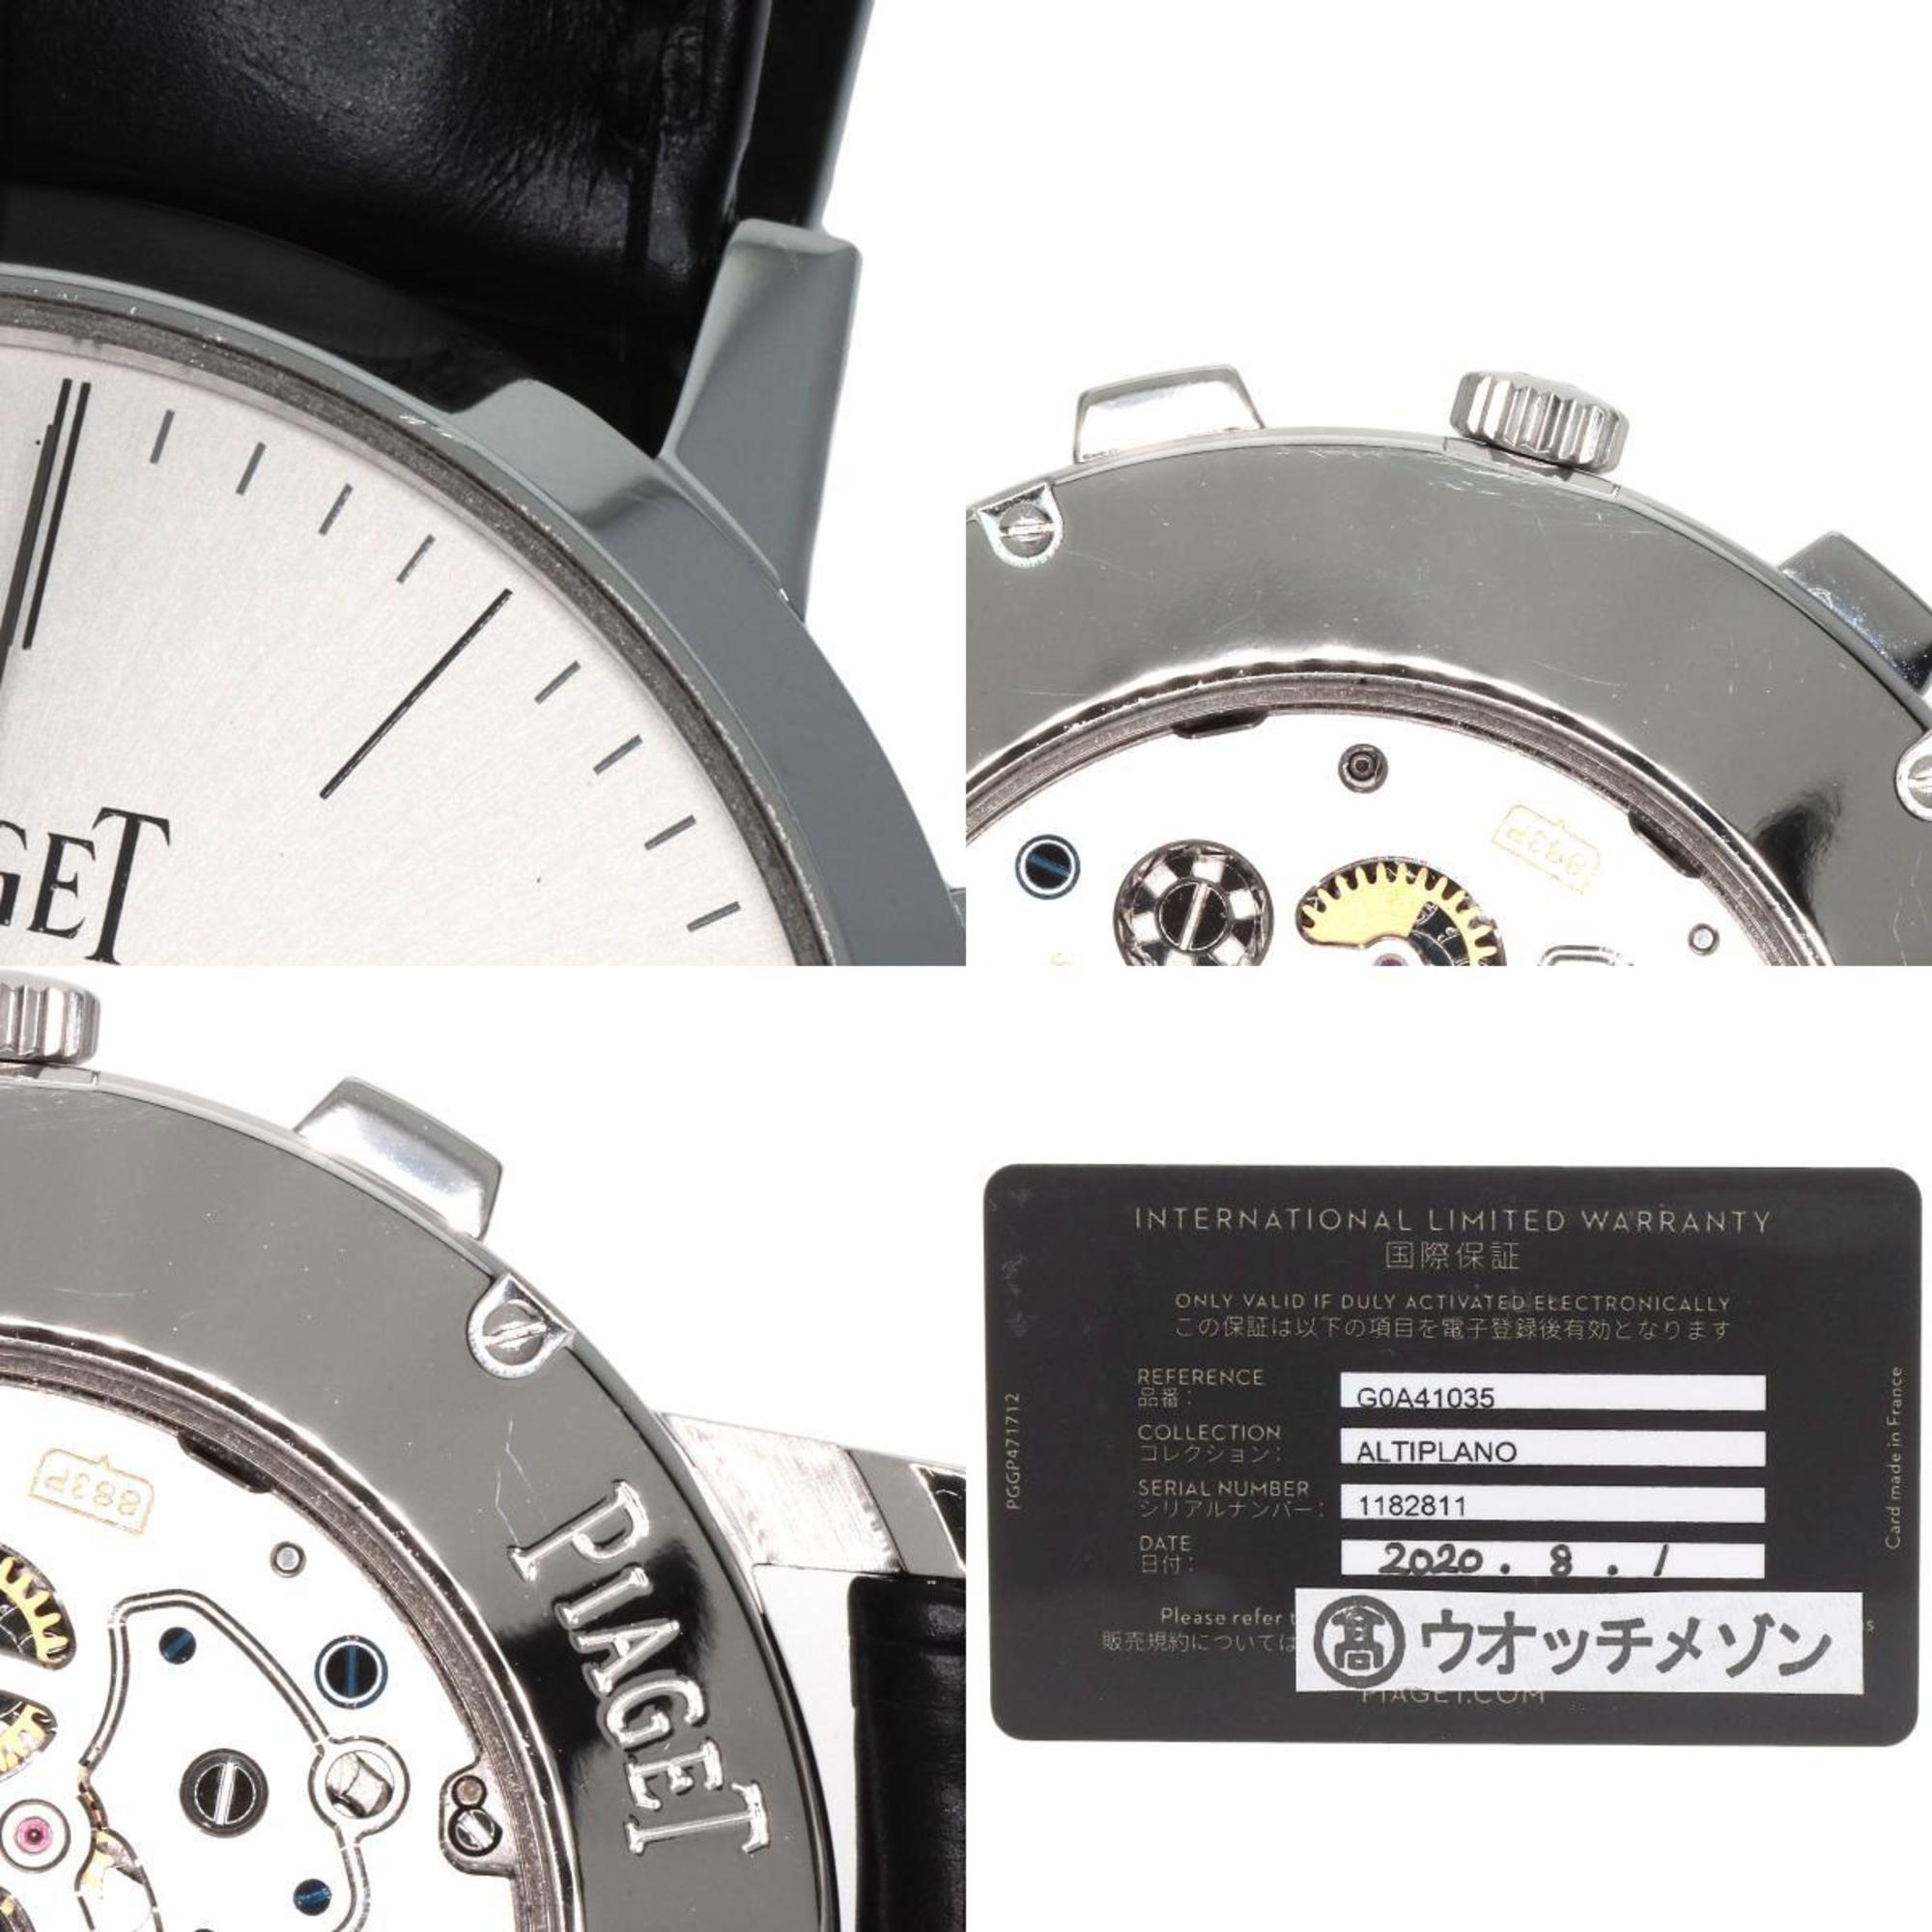 Piaget G01035 Altiplano Chrono Bluff Watch, 18K White Gold, Leather, Men's